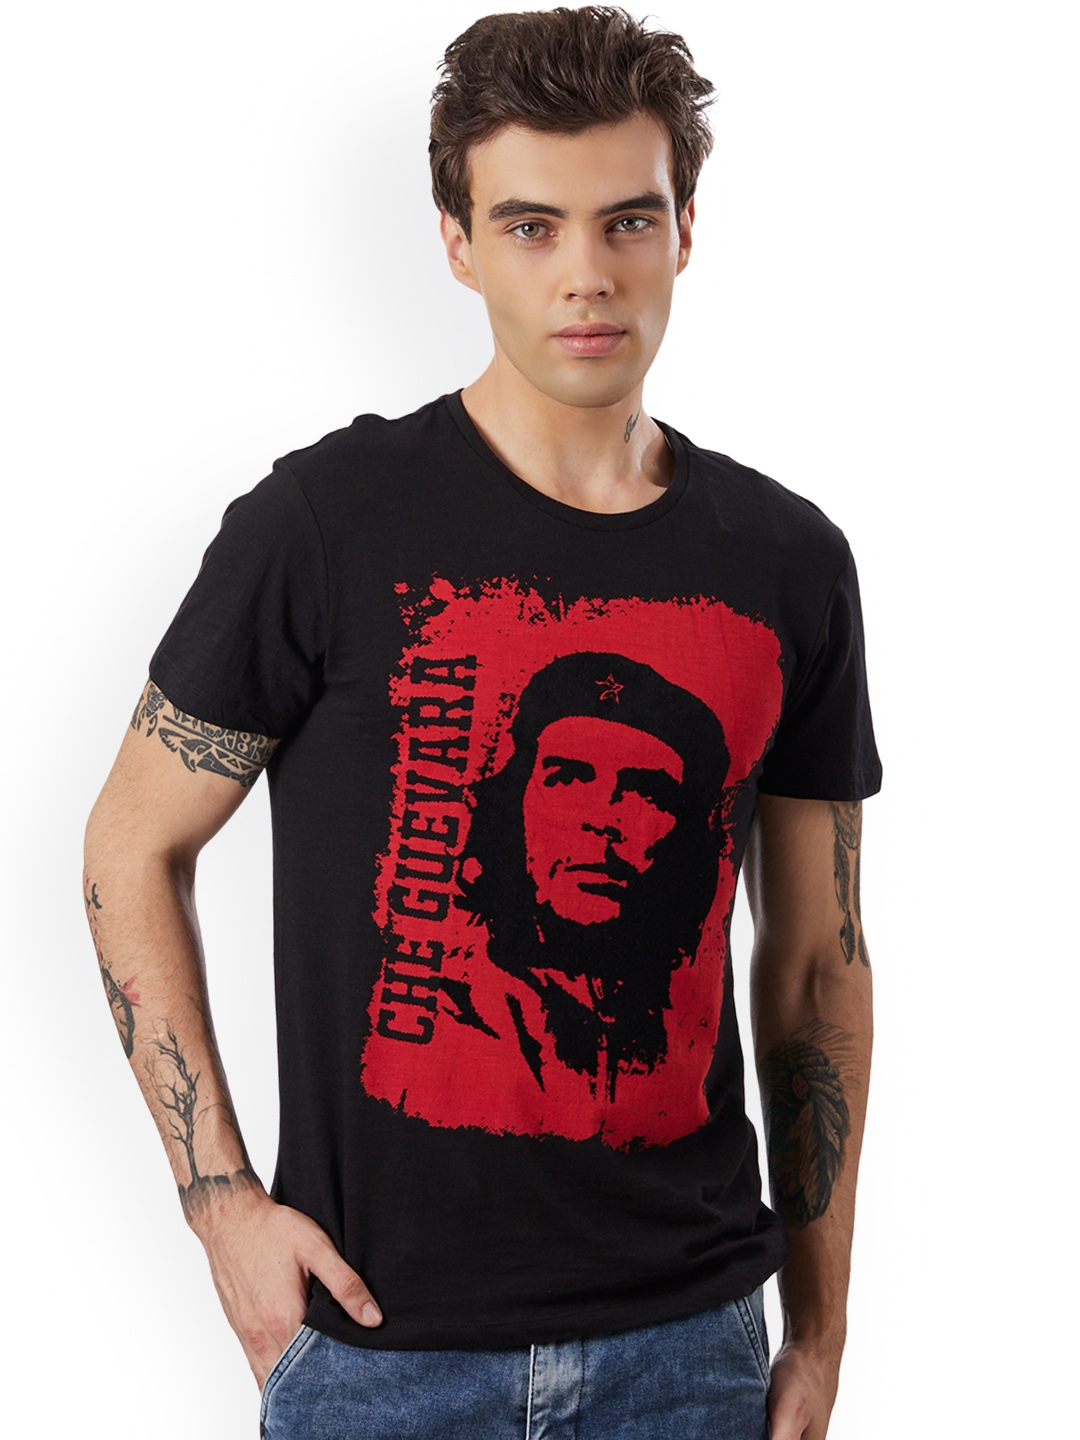 Che Guevara - Unisex Black on Red T-Shirt